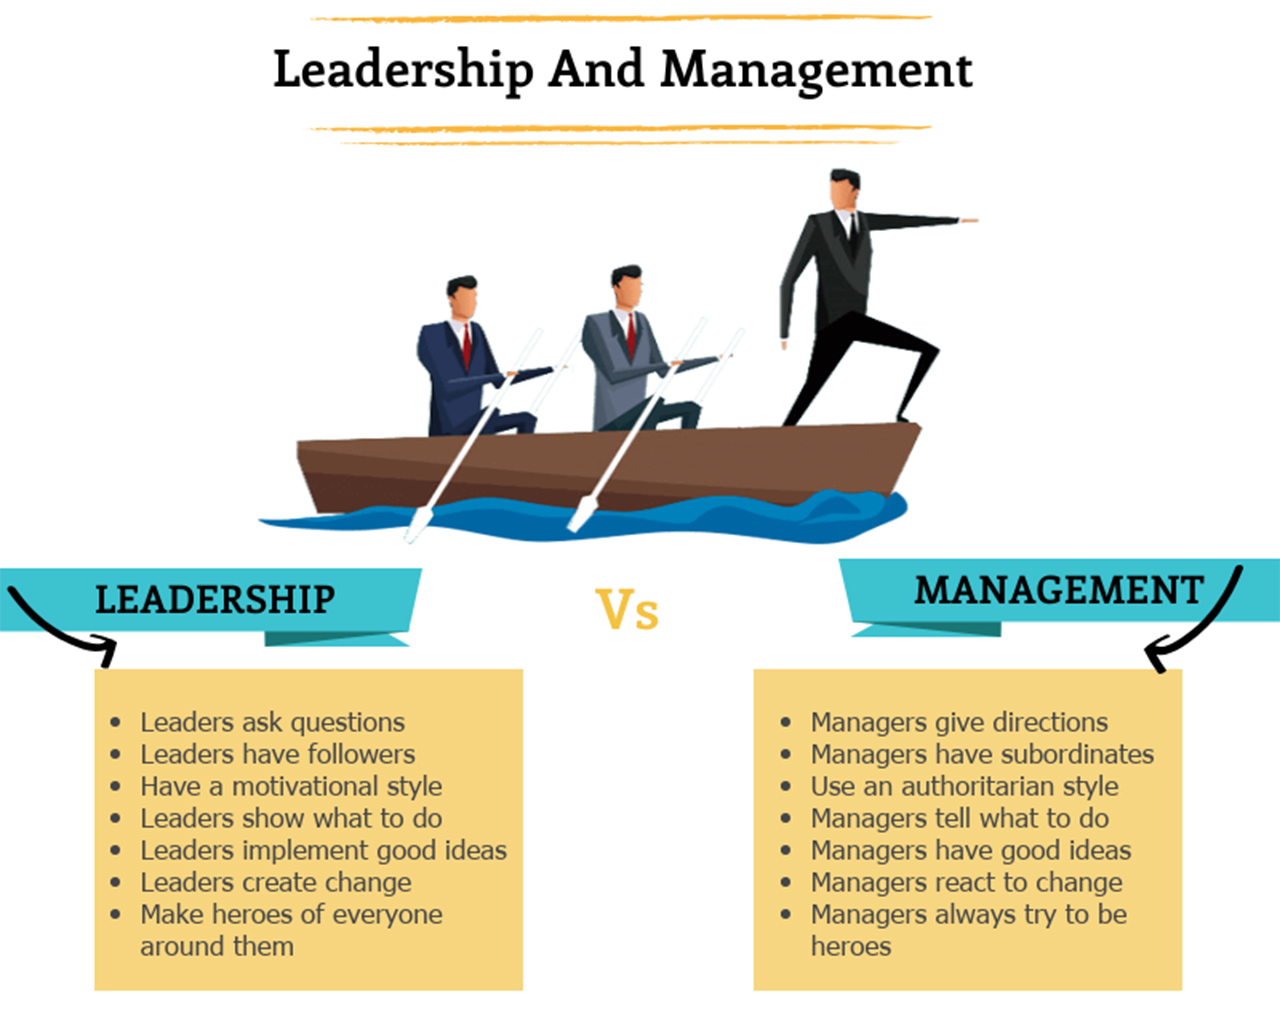 How 2 support. Leadership and Management. Лидерство в менеджменте. Leadership and Management Styles. Leadership in Management.